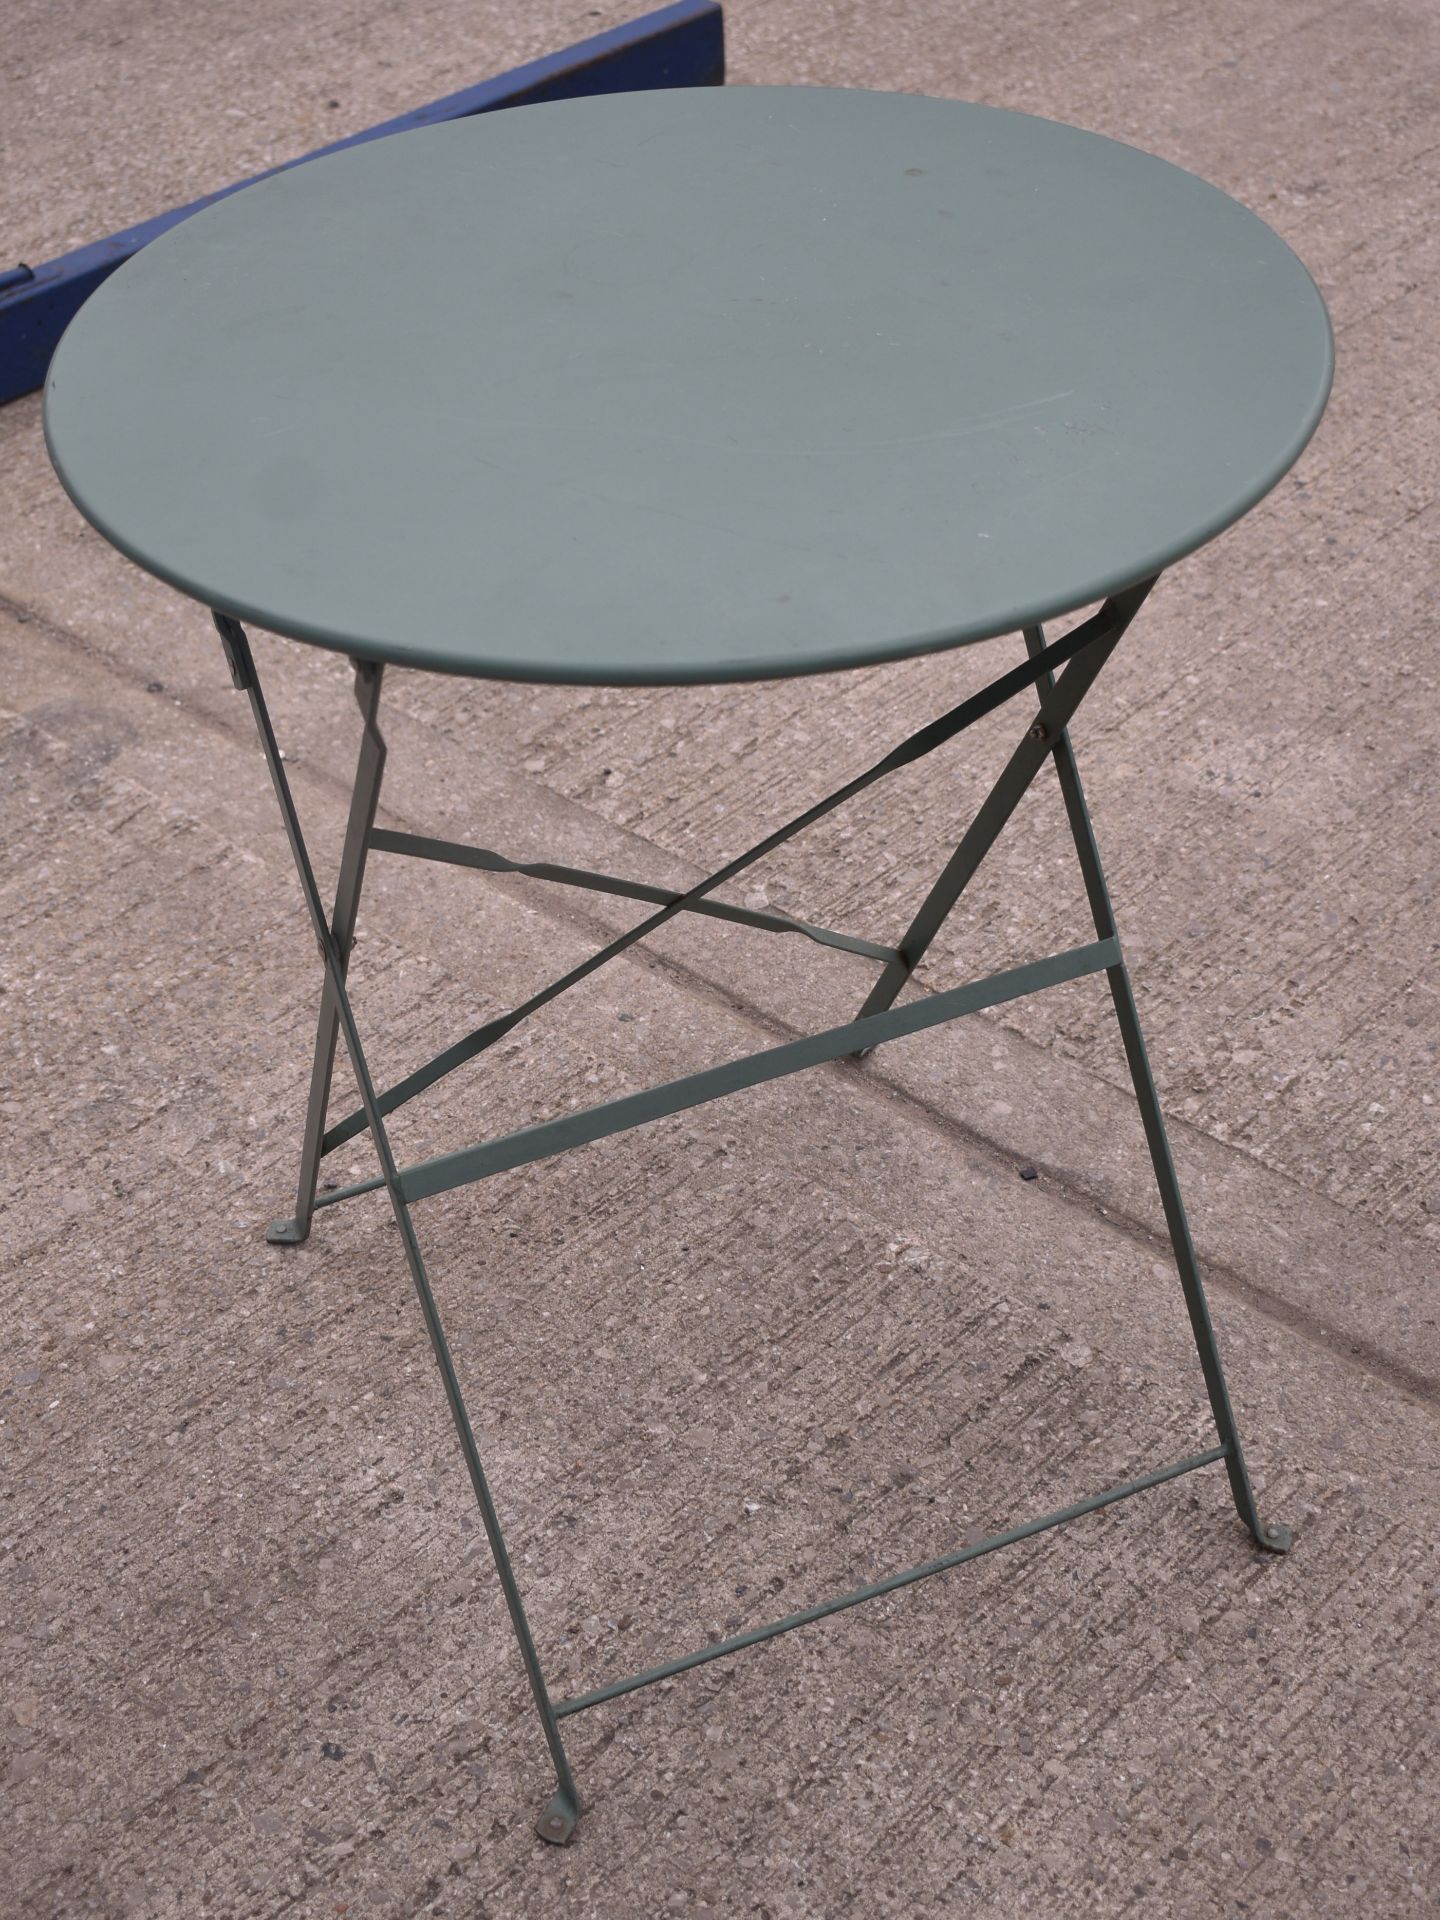 1 x Round Foldaway Green Metal Garden Table - 60 (D) x 71 (H) cms - Ref: K235 - CL905 - Location: Al - Image 2 of 10